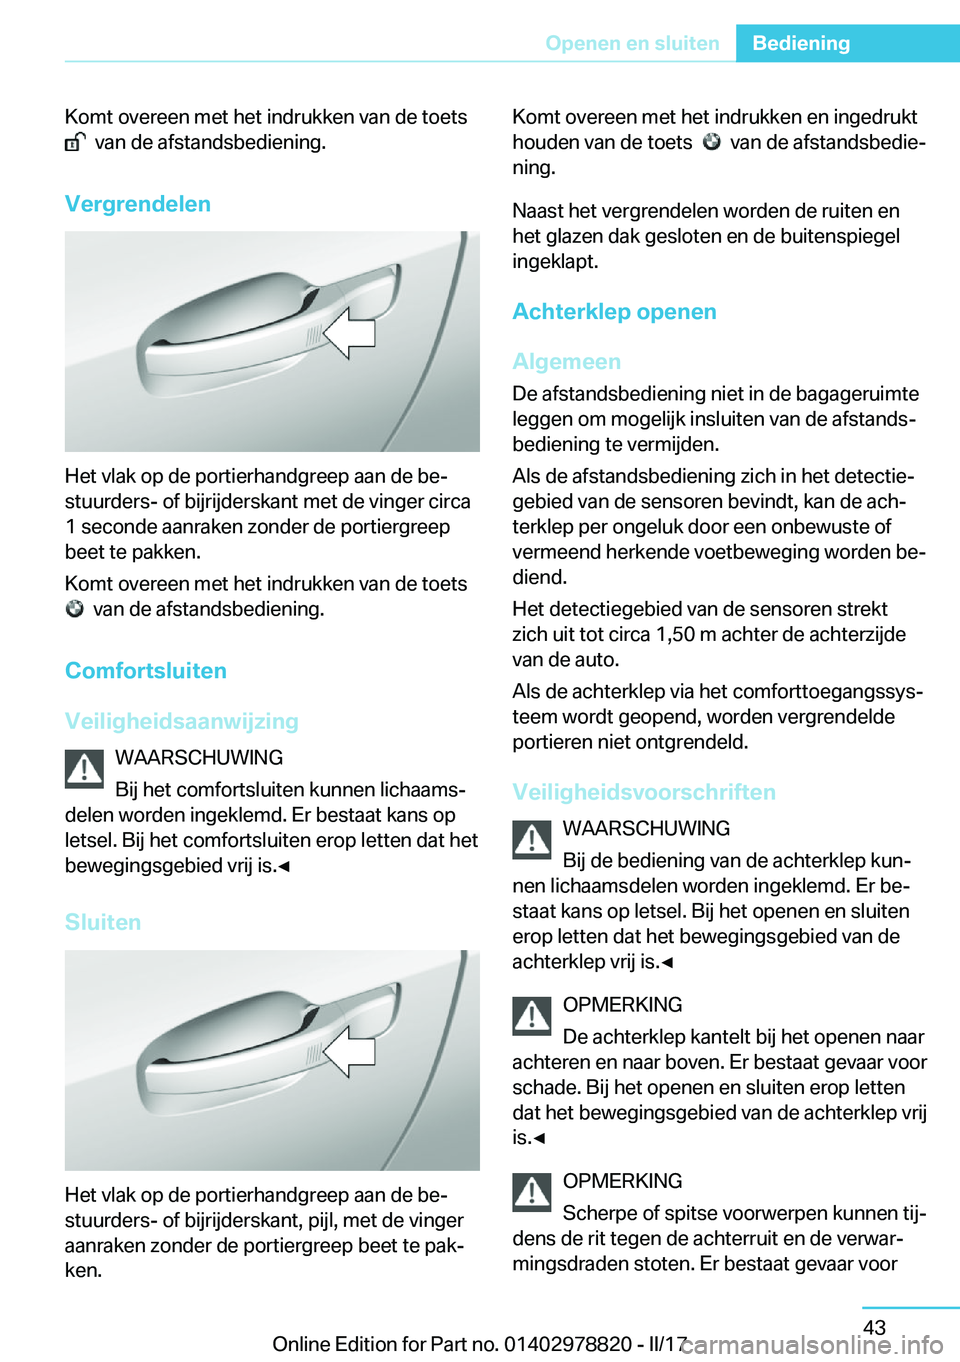 BMW I3 2017  Instructieboekjes (in Dutch) �K�o�m�t� �o�v�e�r�e�e�n� �m�e�t� �h�e�t� �i�n�d�r�u�k�k�e�n� �v�a�n� �d�e� �t�o�e�t�s� 
� � �v�a�n� �d�e� �a�f�s�t�a�n�d�s�b�e�d�i�e�n�i�n�g�.
�V�e�r�g�r�e�n�d�e�l�e�n
�H�e�t� �v�l�a�k� �o�p� �d�e� �